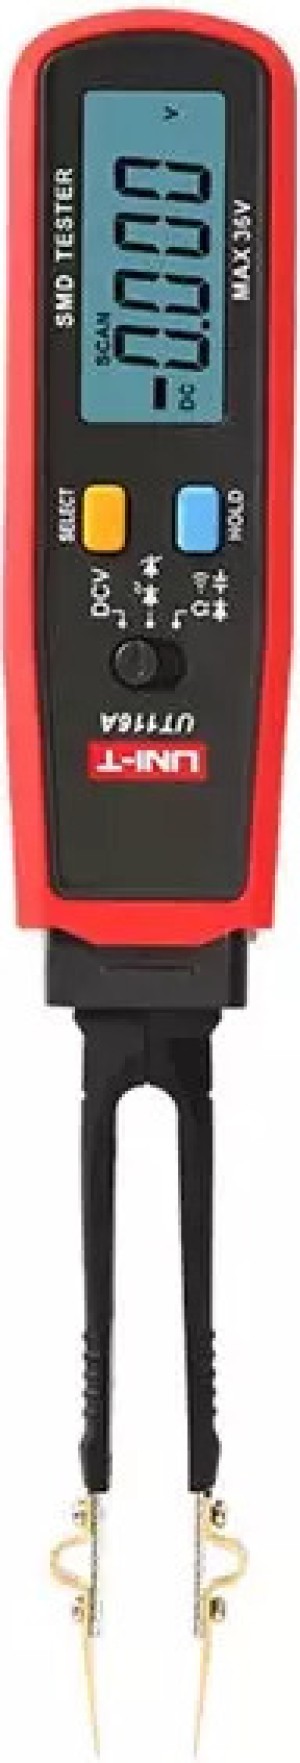 UNI-T digitaler SMD-Tester UT116A, 36V DC